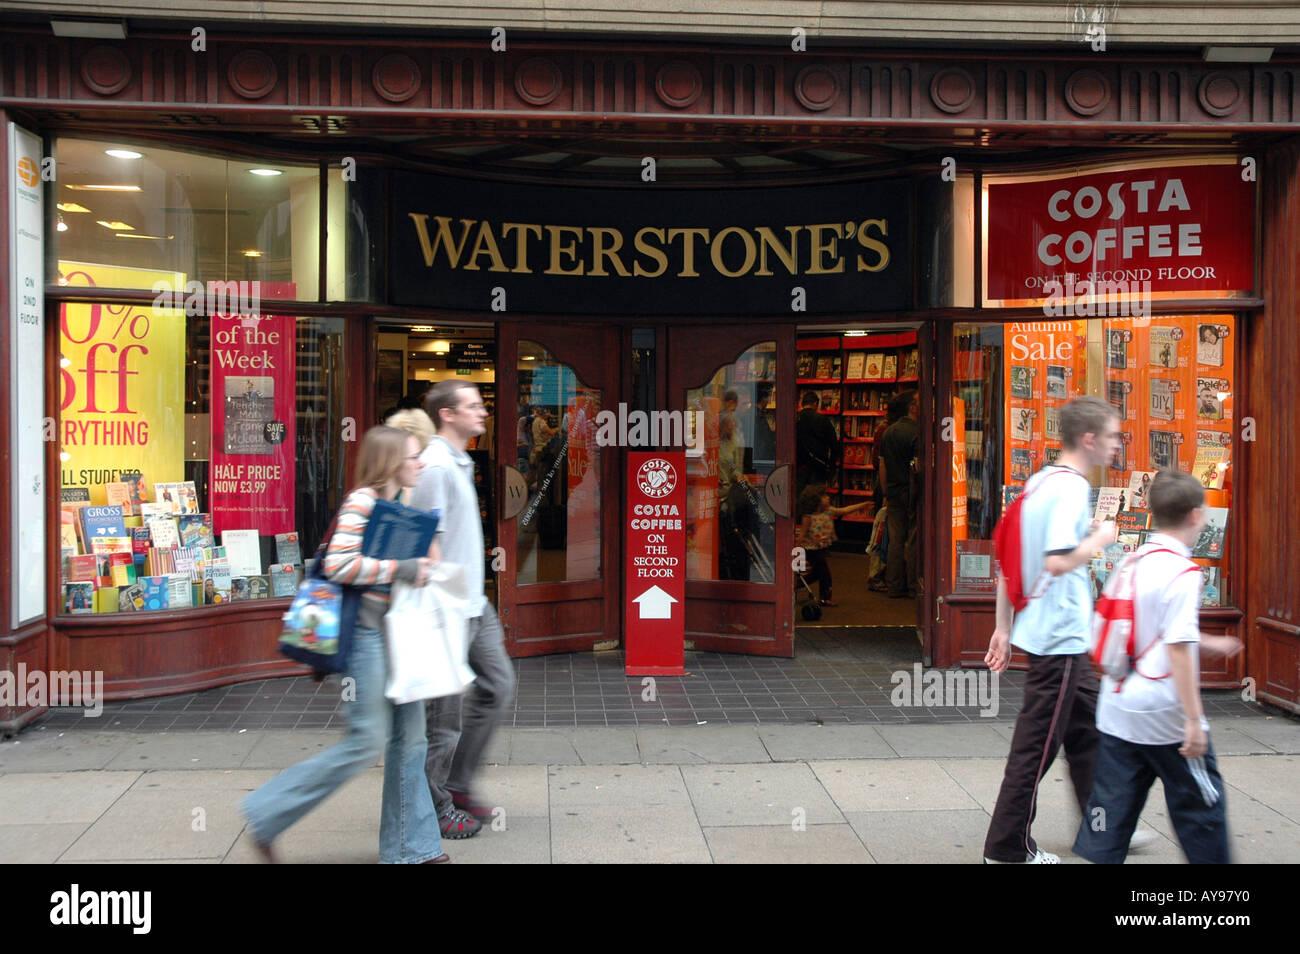 Waterstone's book store in Cambridge Stock Photo